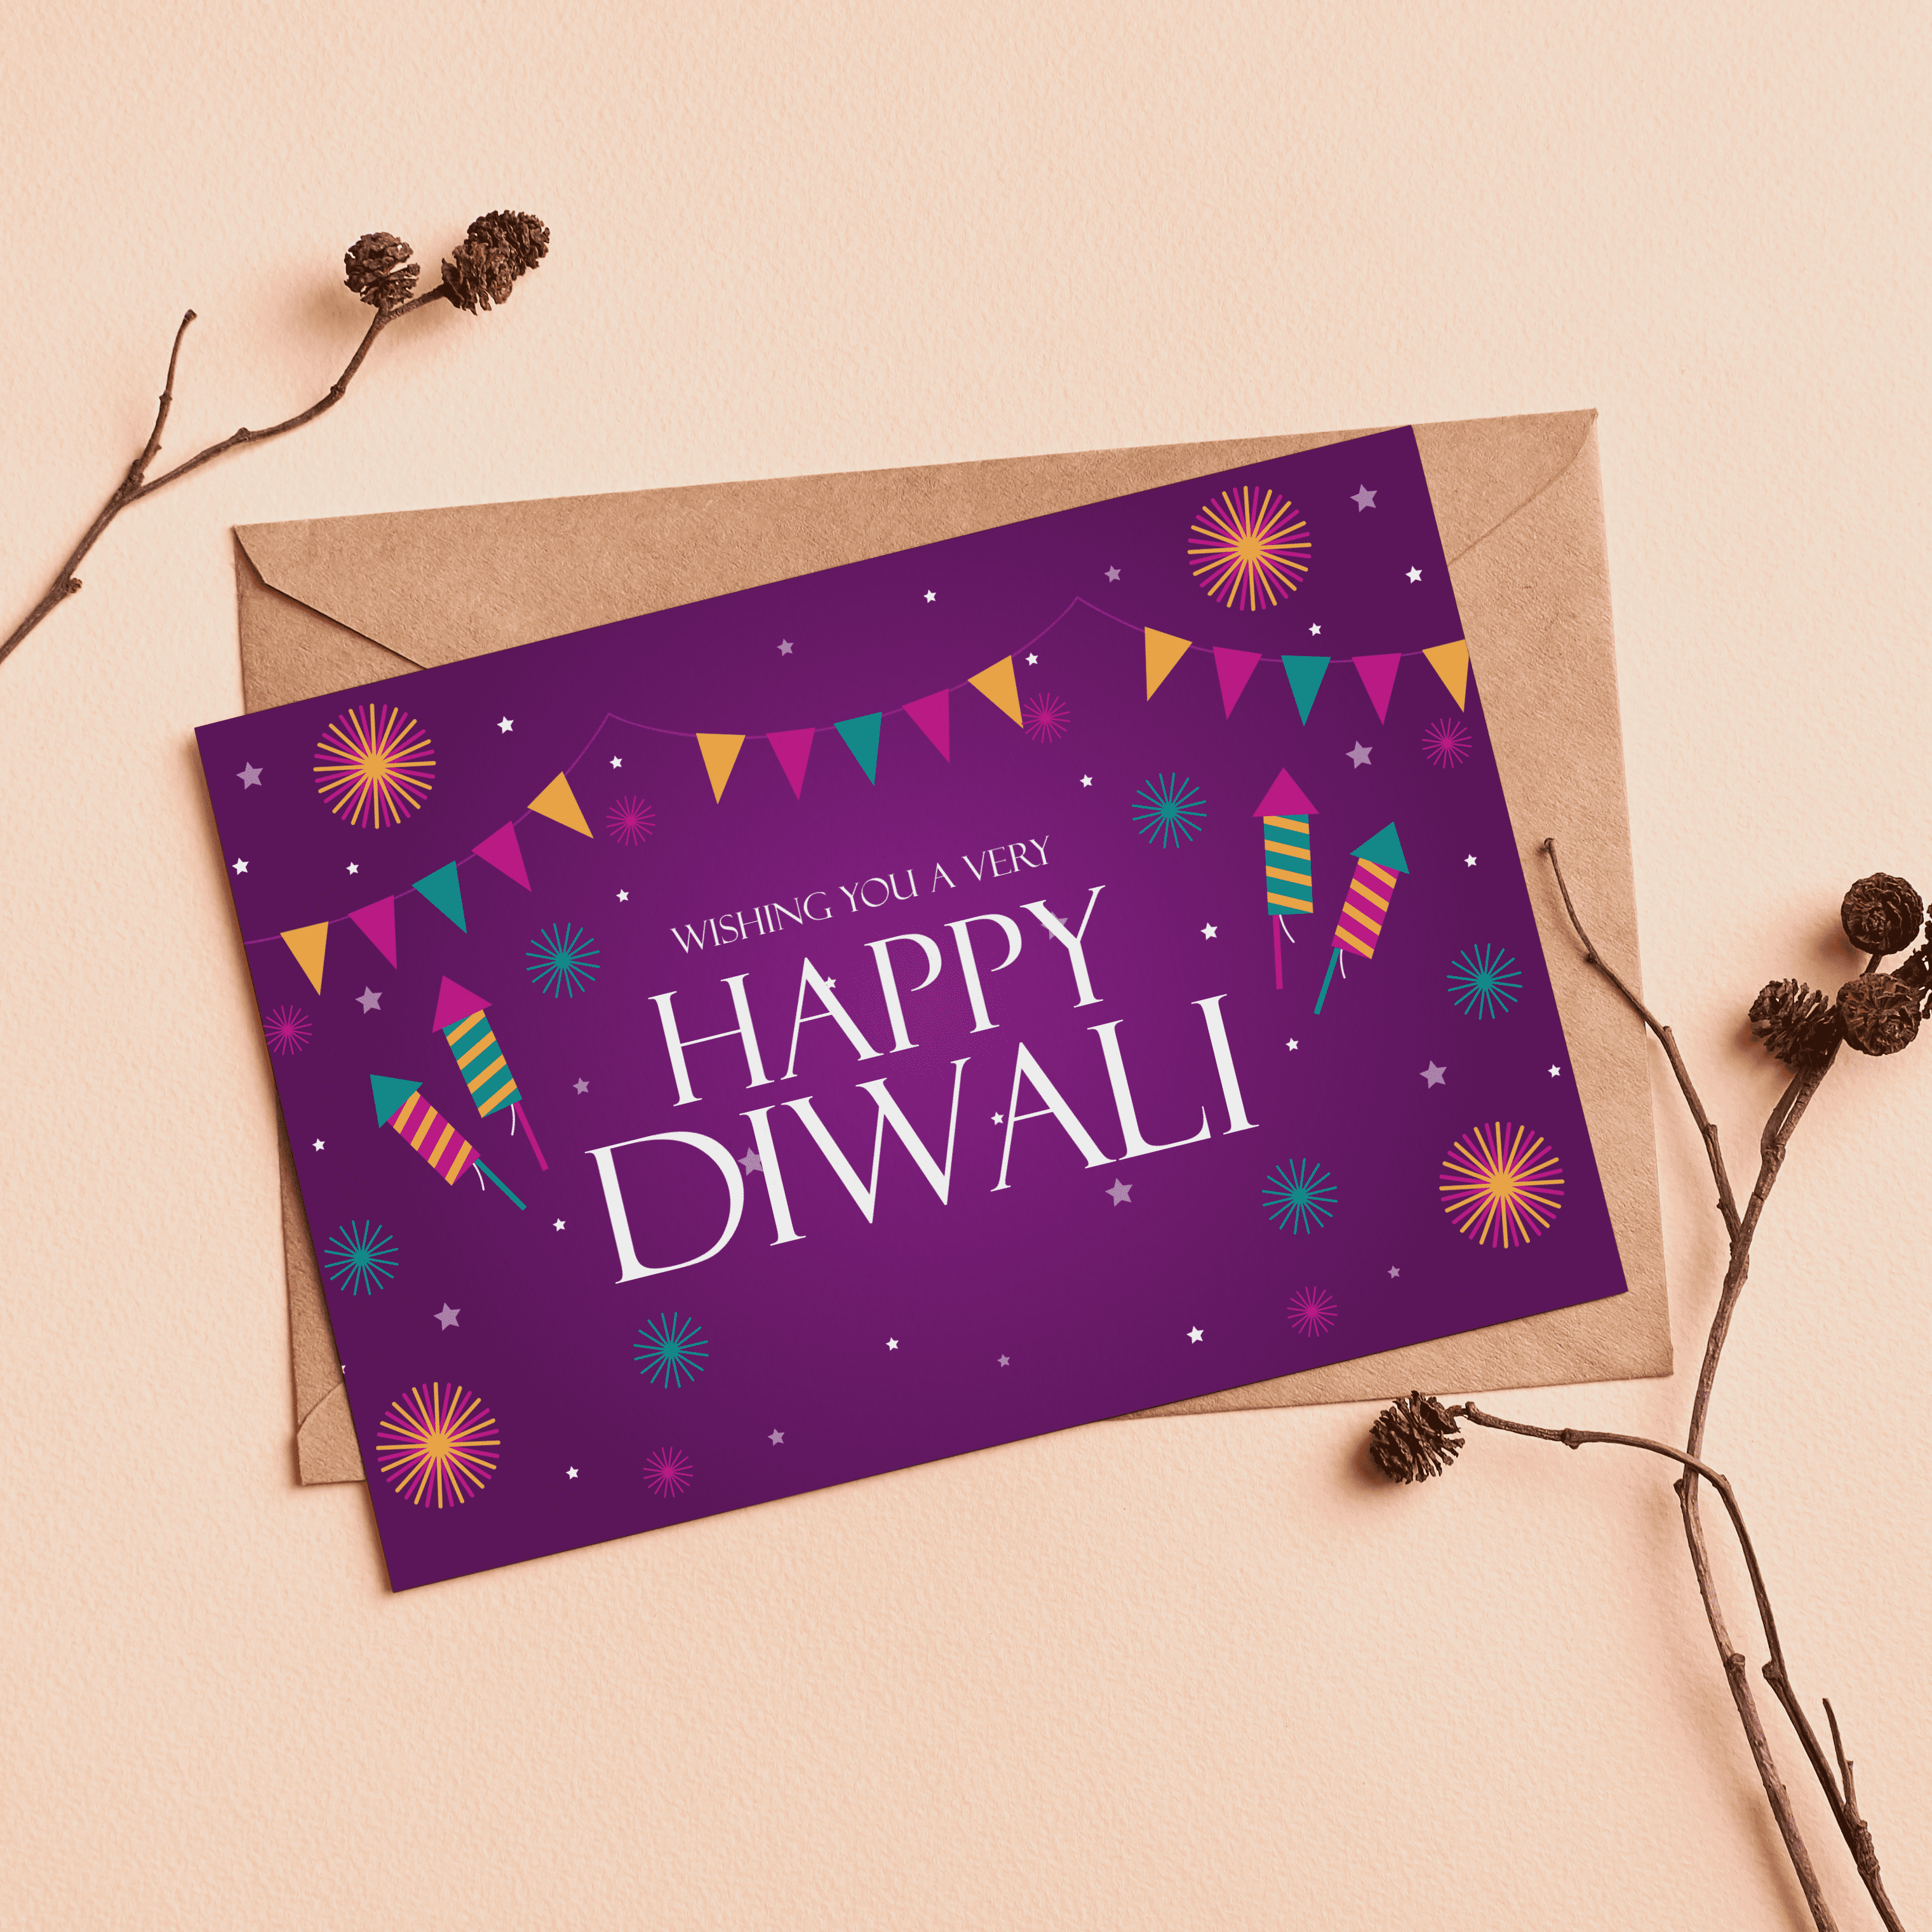 Wishing you a very happy diwali